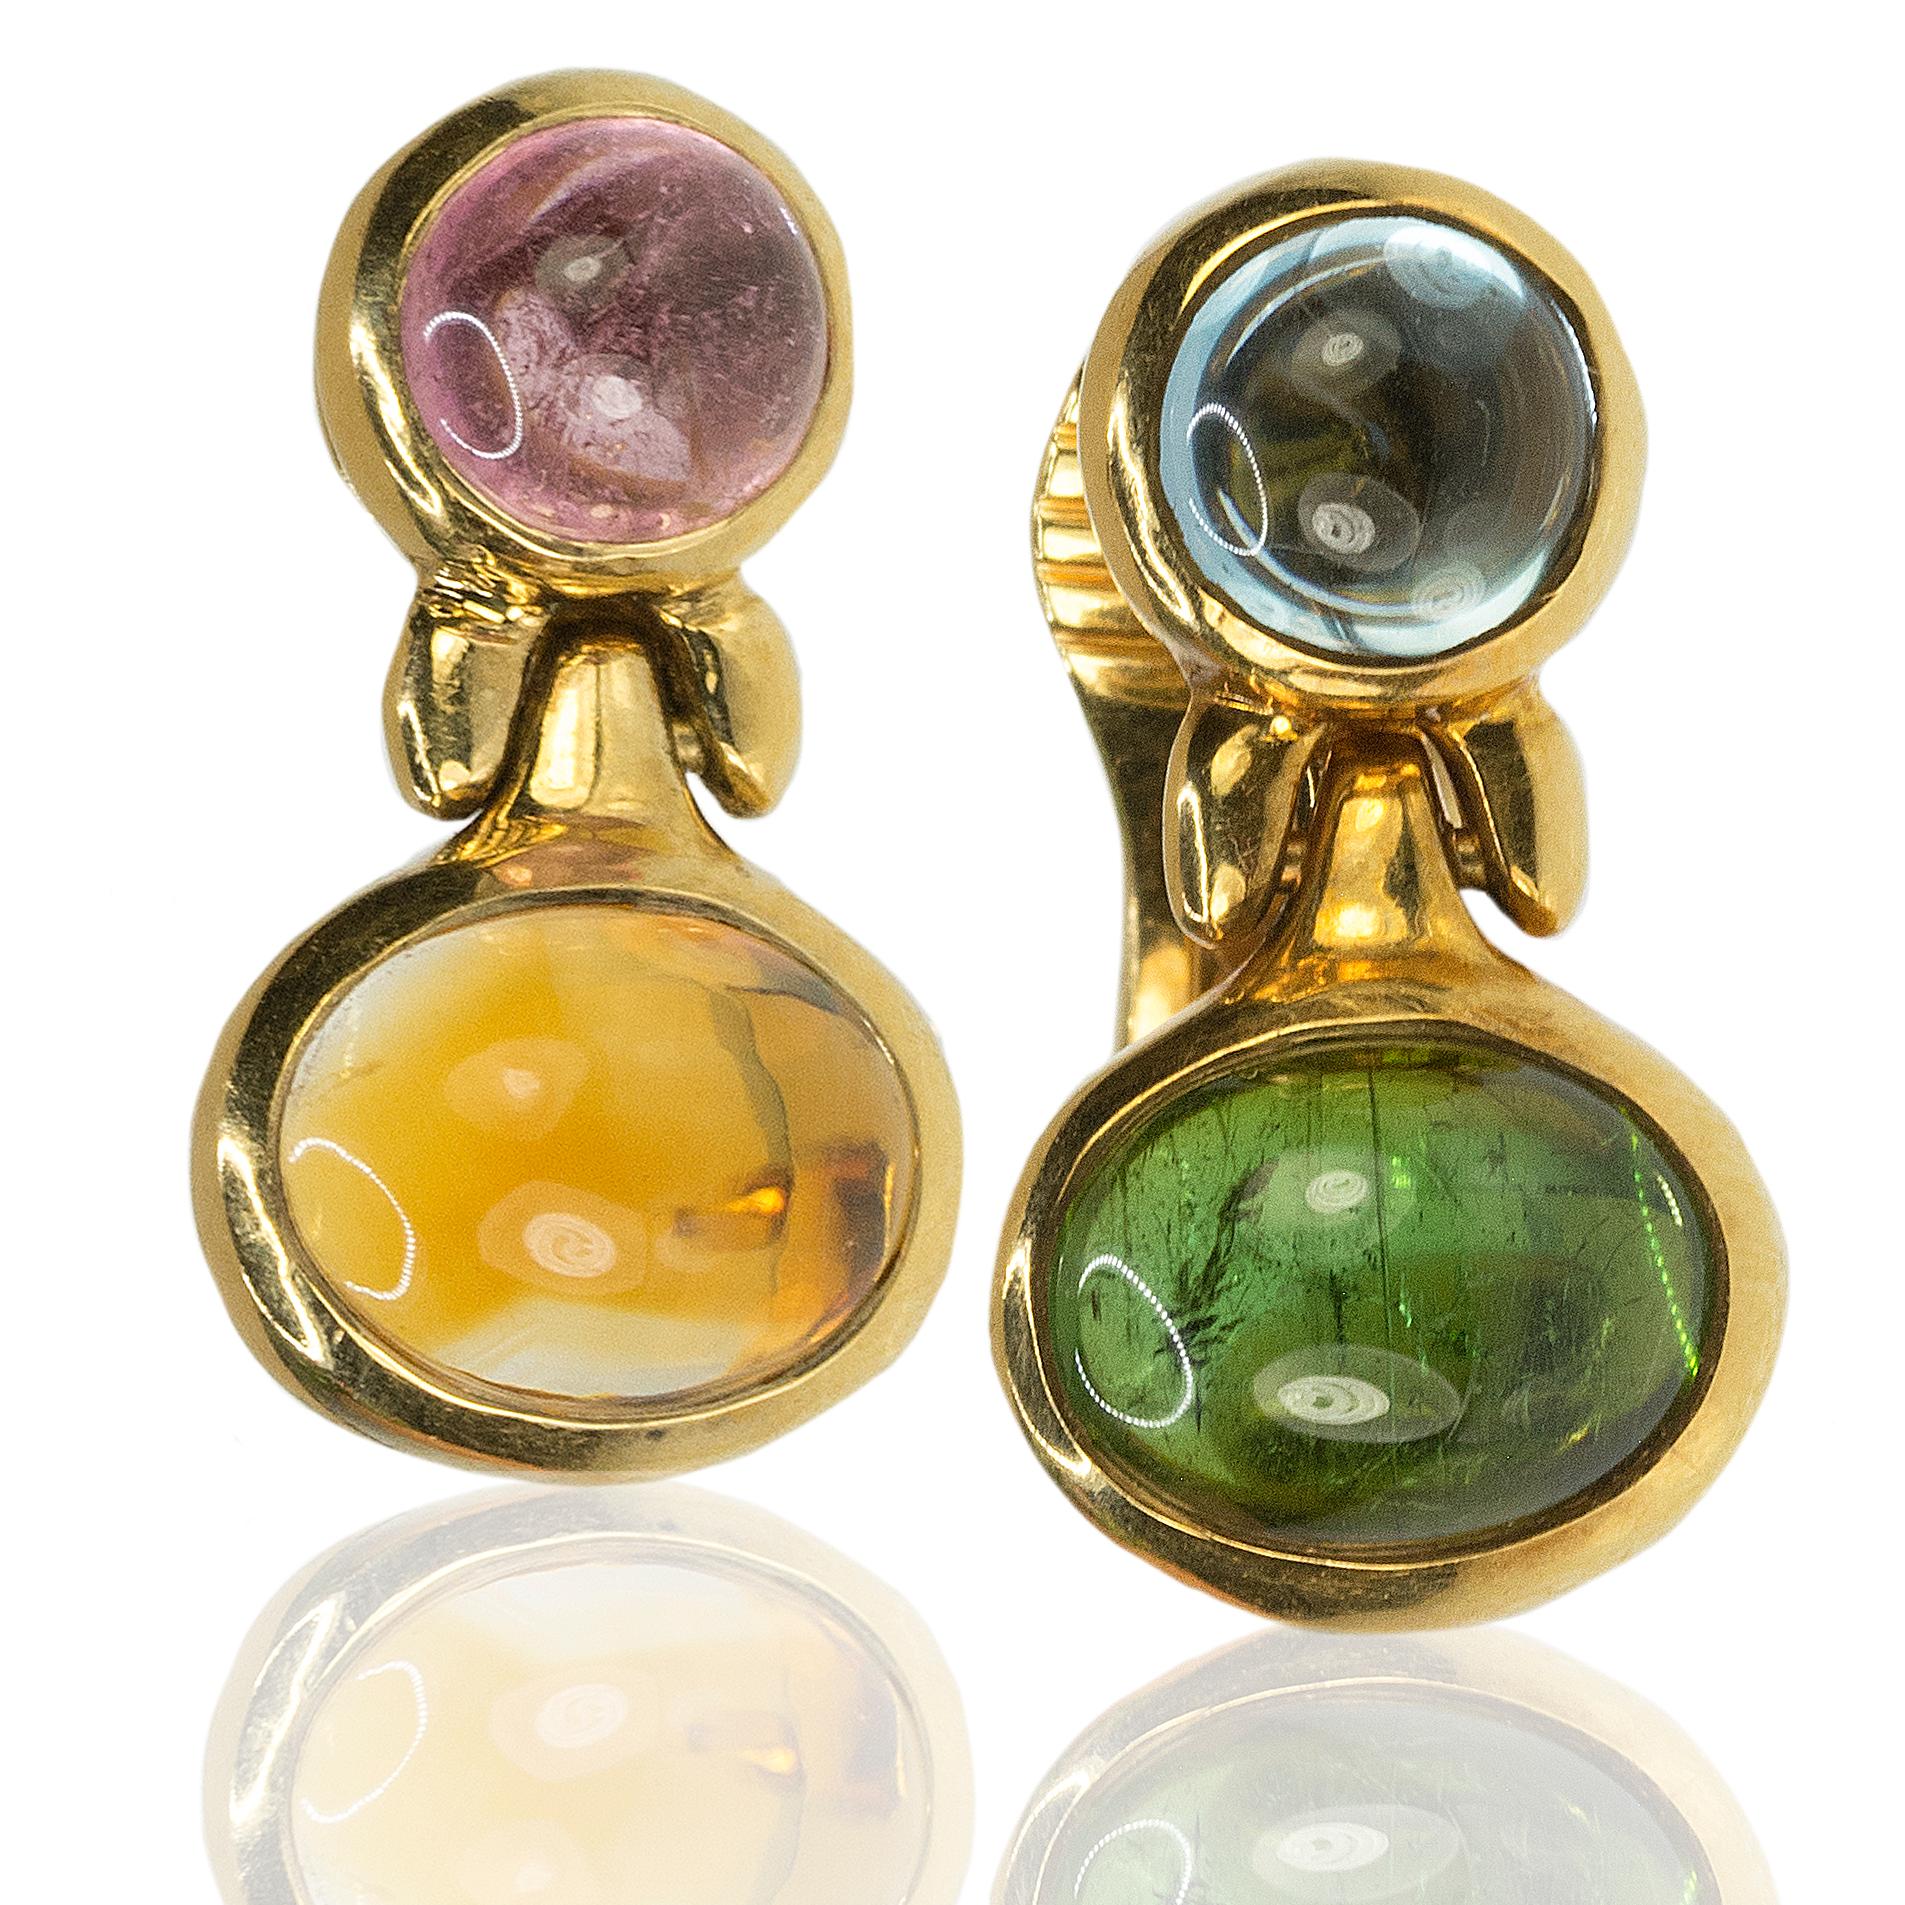 18k Bulgari multi gemstone earrings with cabochon tourmaline, aquamarine, citrine and amethyst. 13.62g